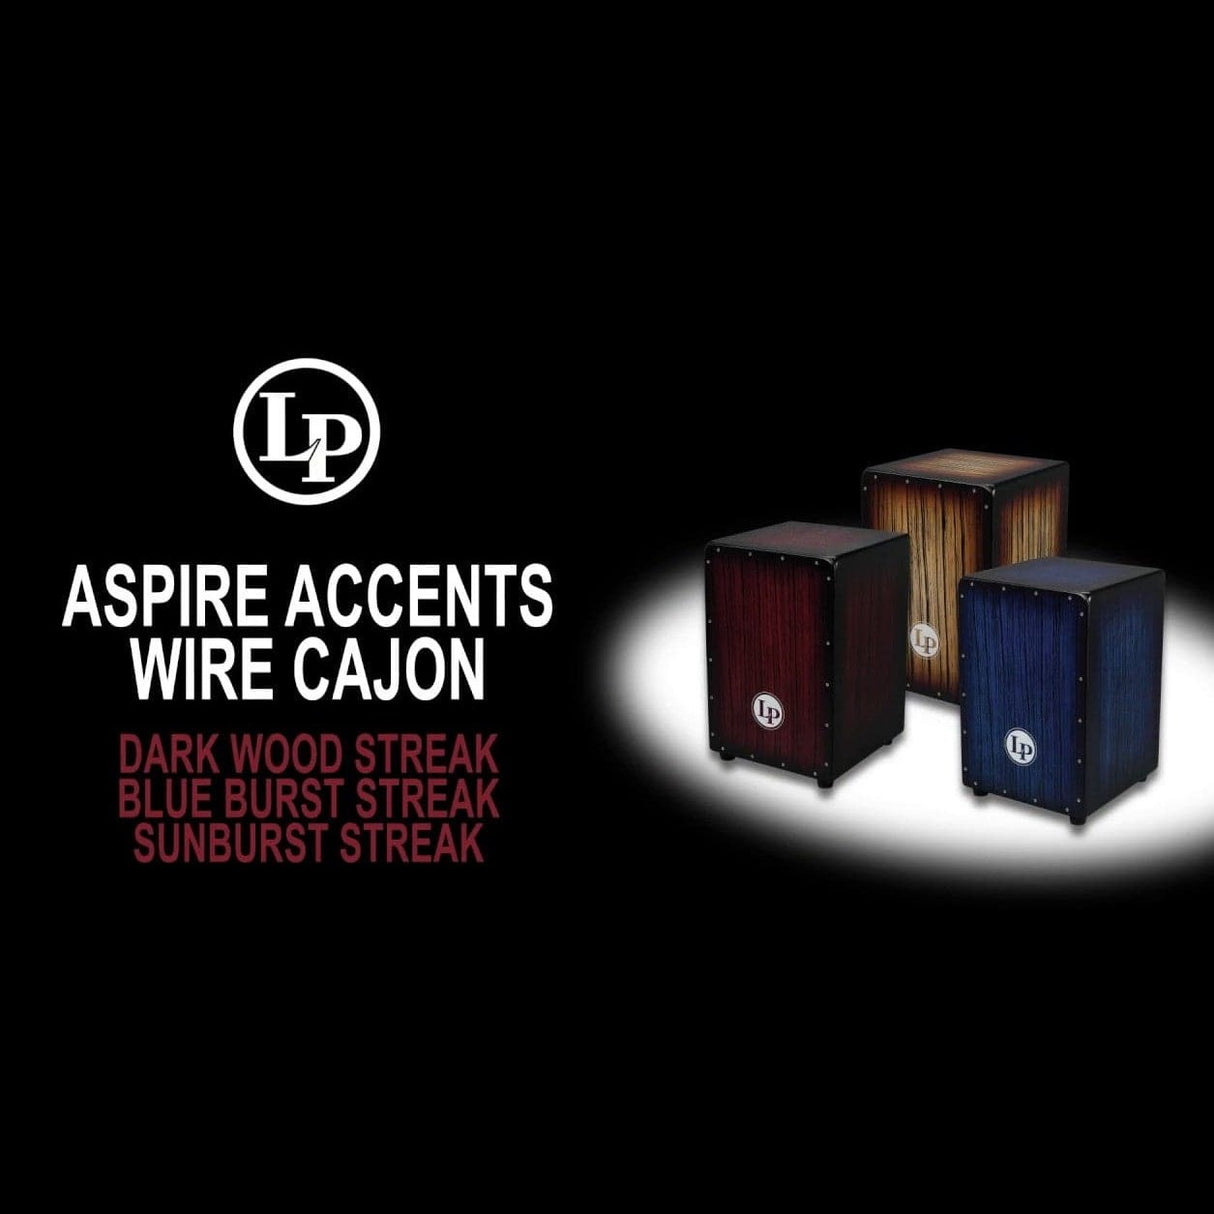 LP Aspire Accents Cajon - Dark Wood Streak